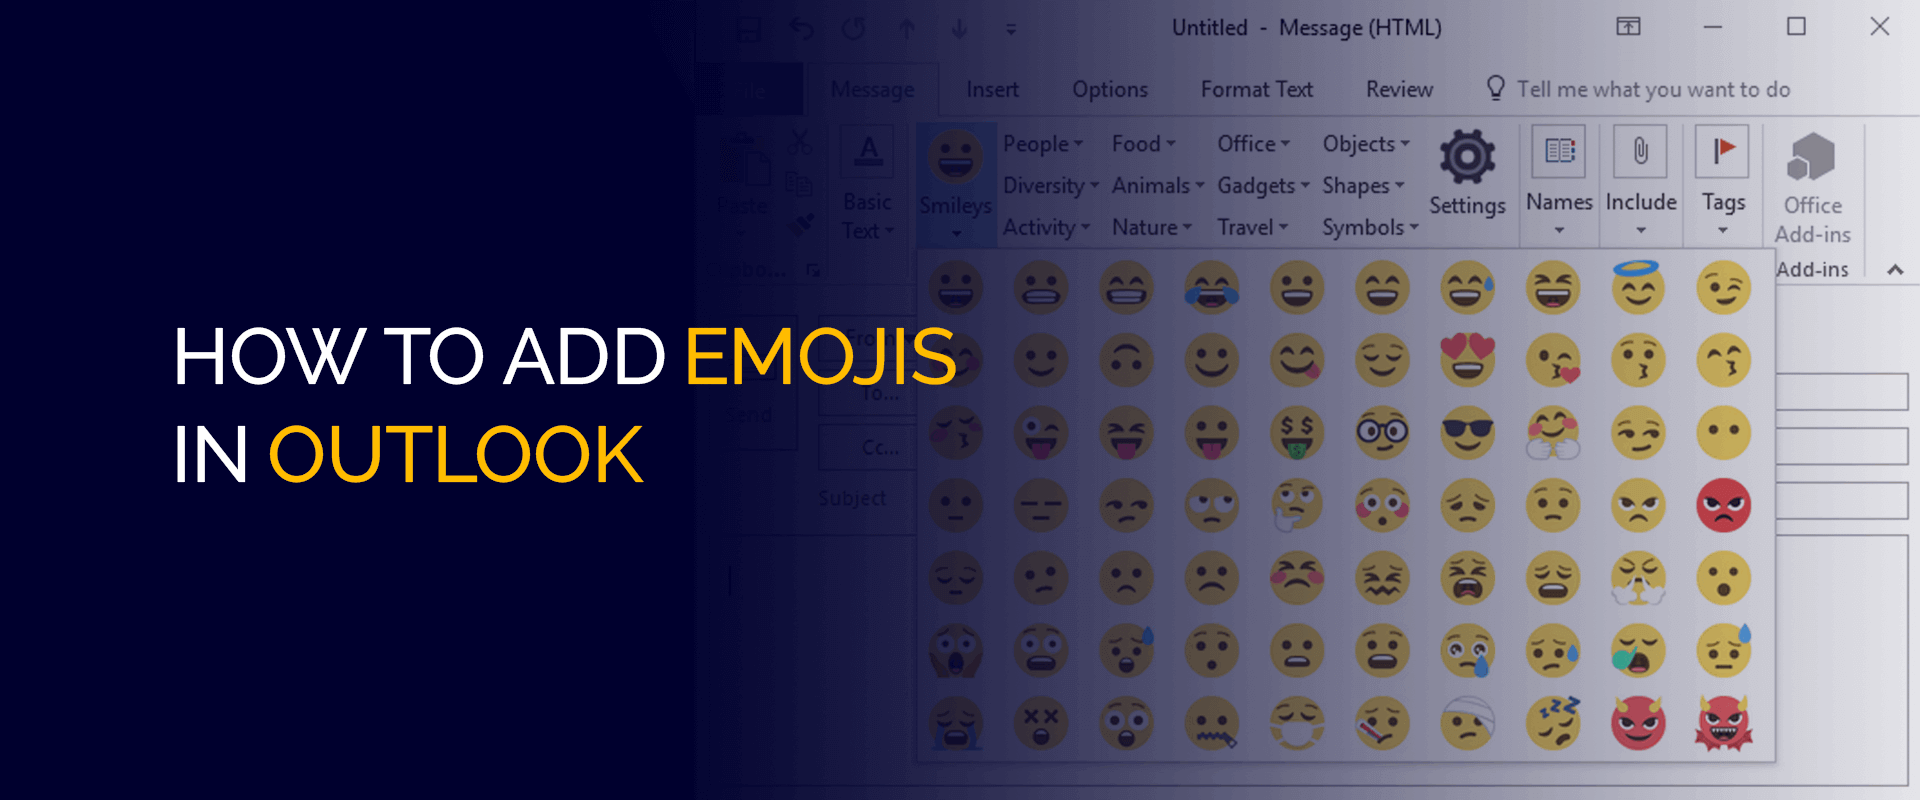 Como adicionar emojis no Outlook